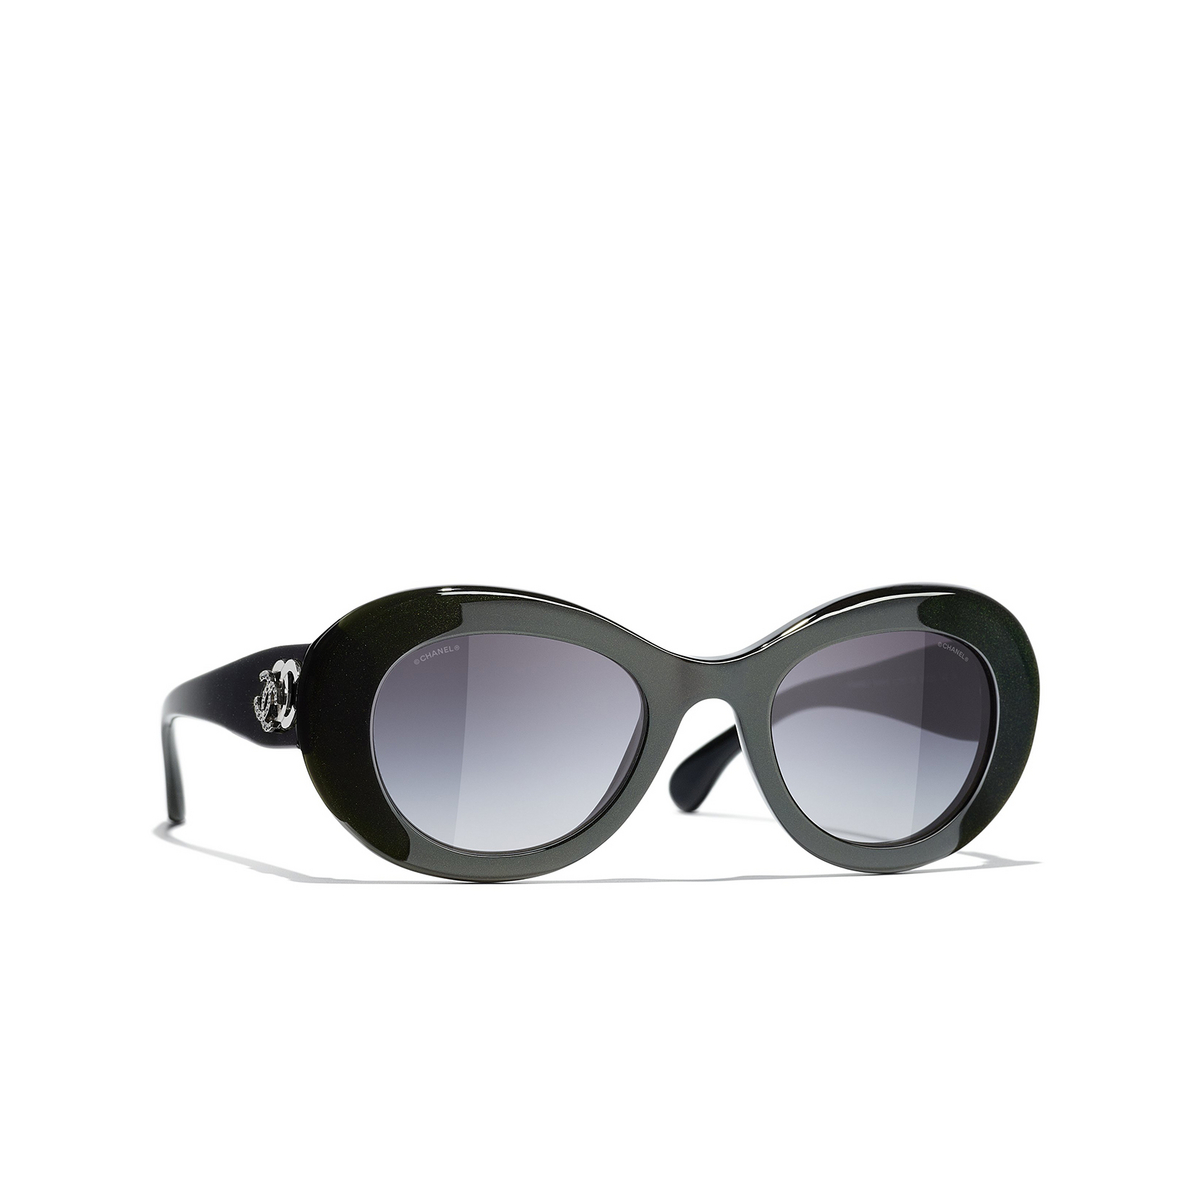 CHANEL oval Sunglasses 1707S6 Green - three-quarters view